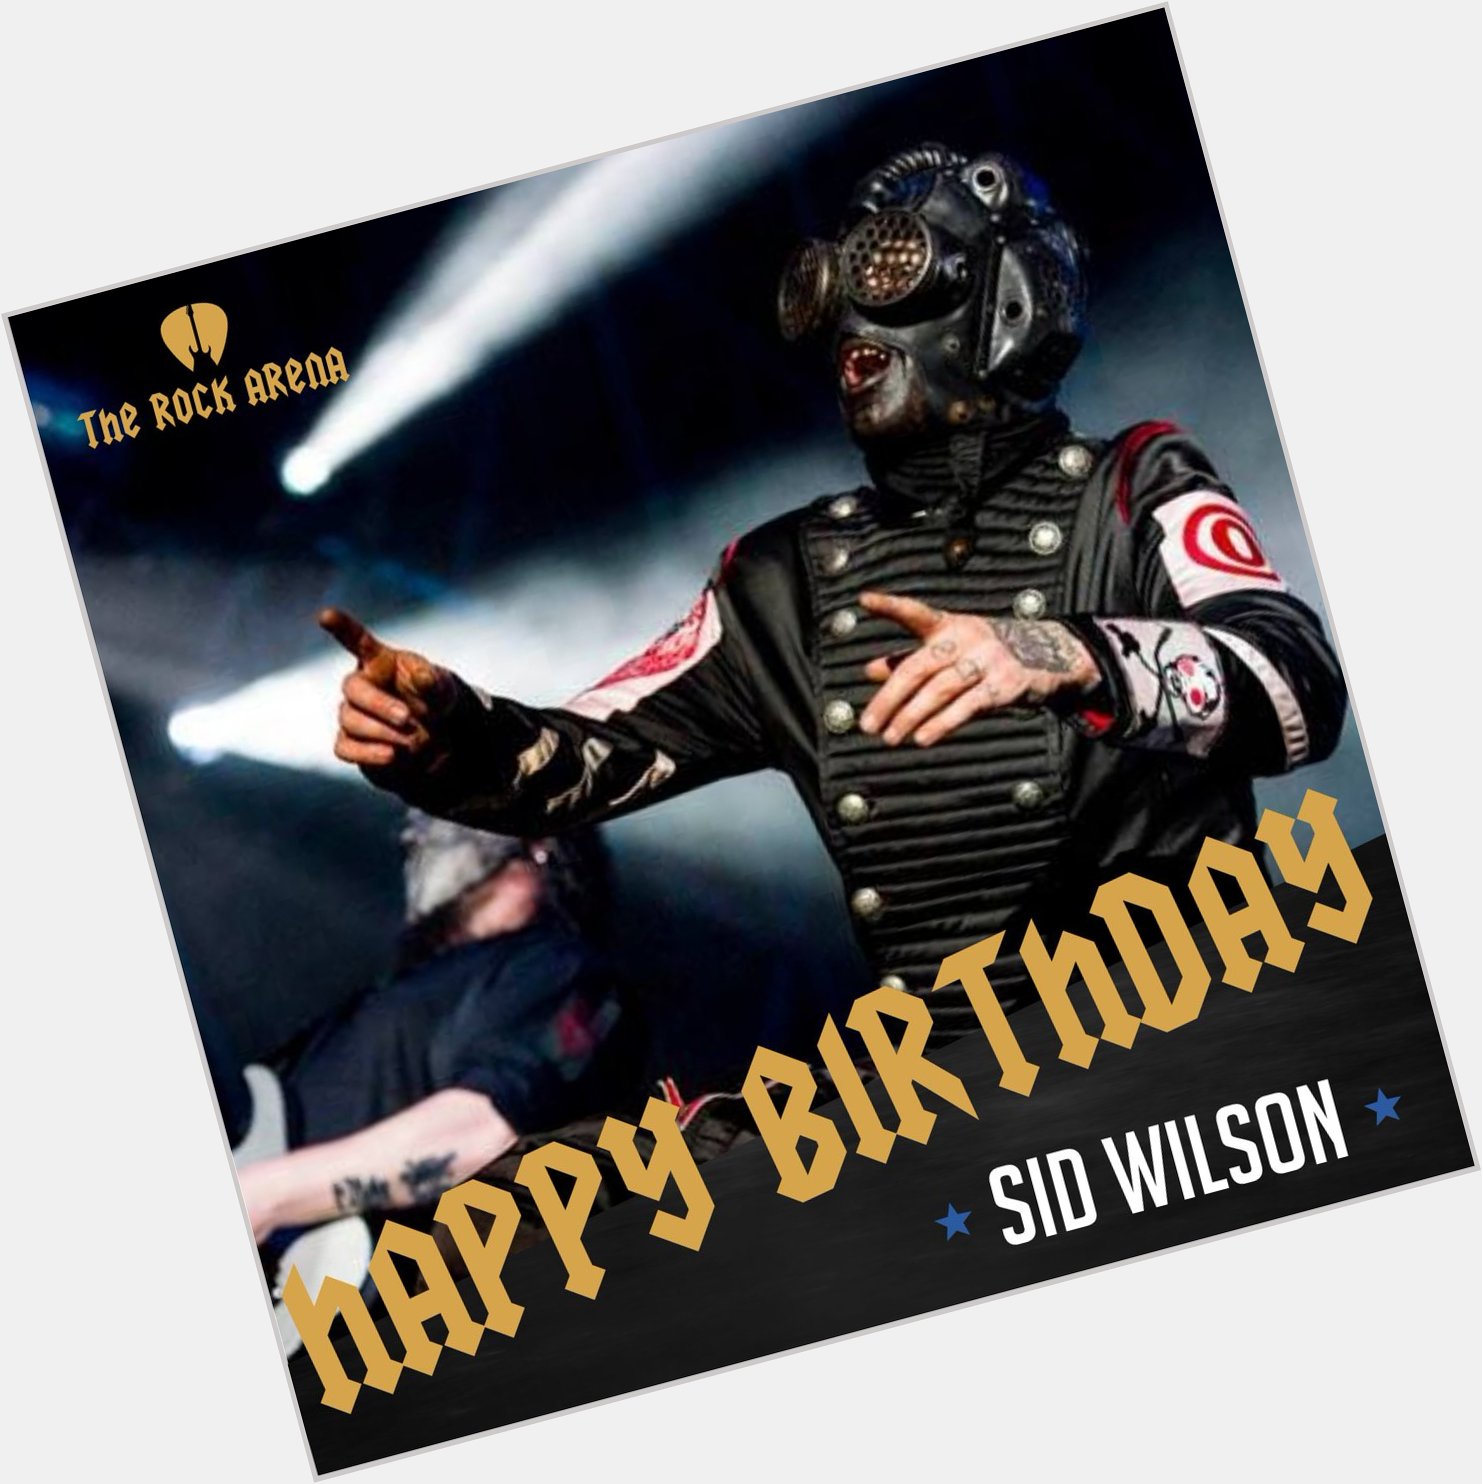 Happy 46th birthday to Sid Wilson 